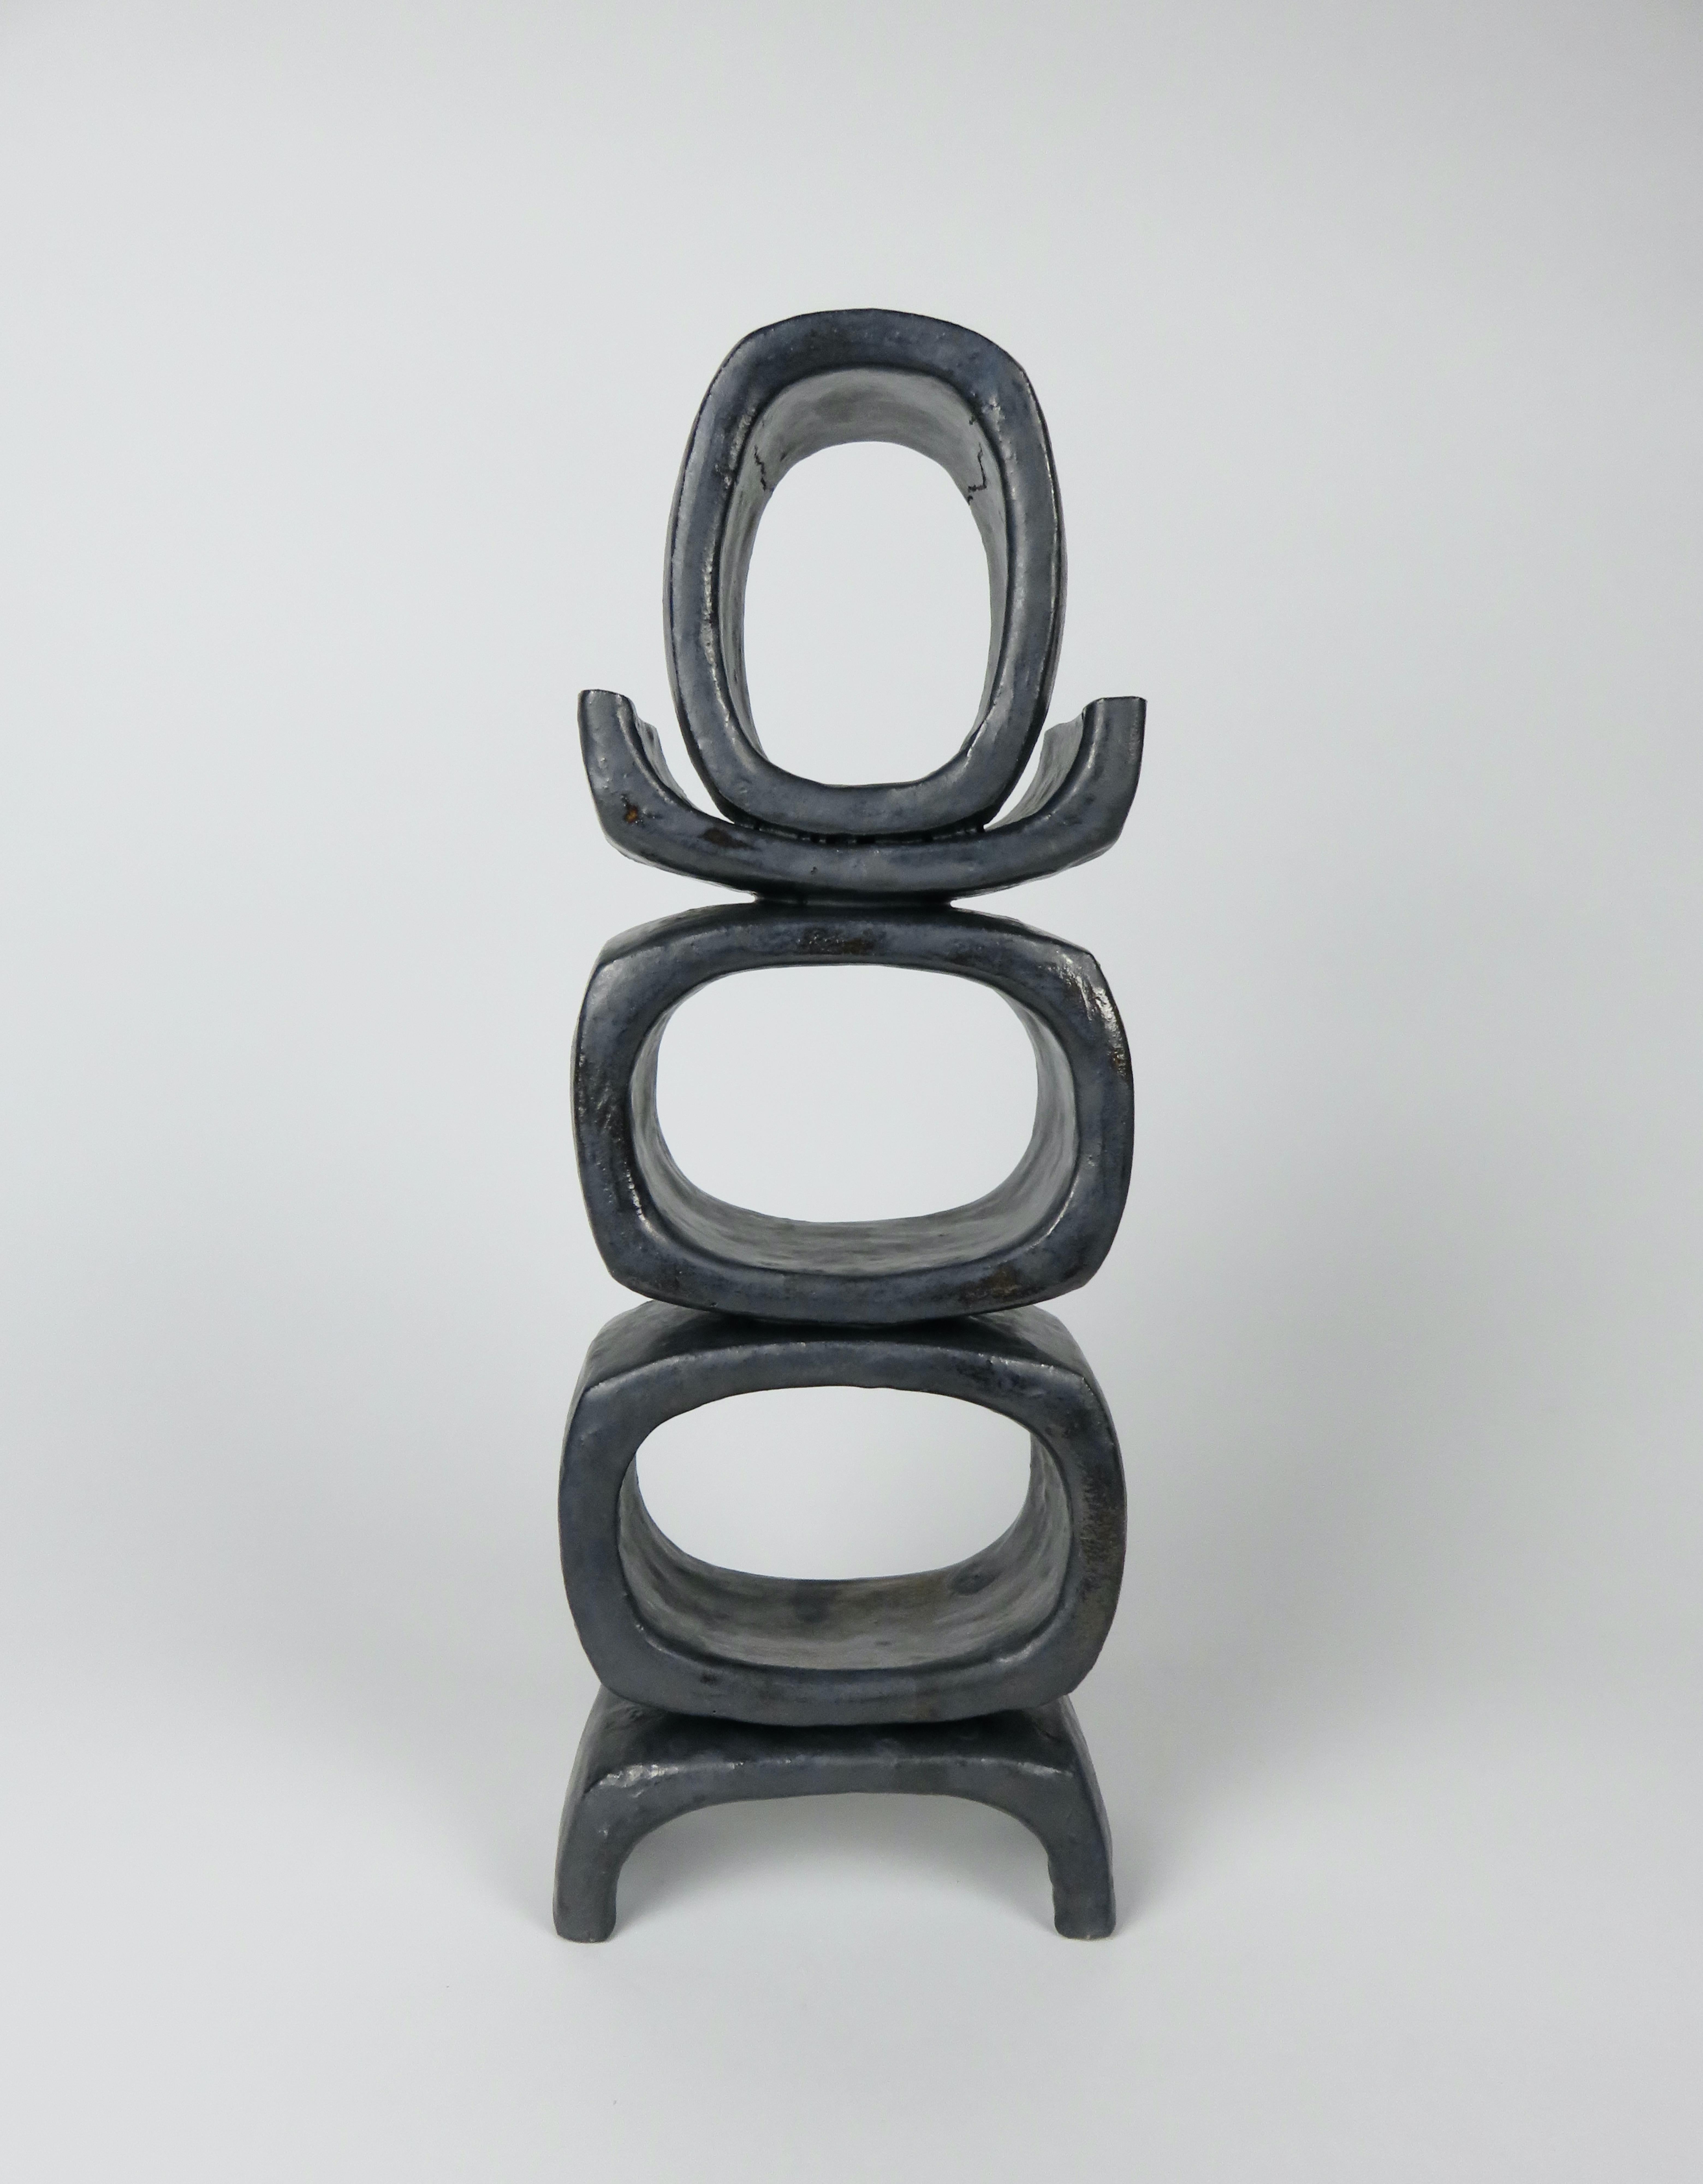 Glazed 3 Rectangular Ovals on Short Angled Legs, Metallic Black-Glaze Clay Sculpture #2 For Sale